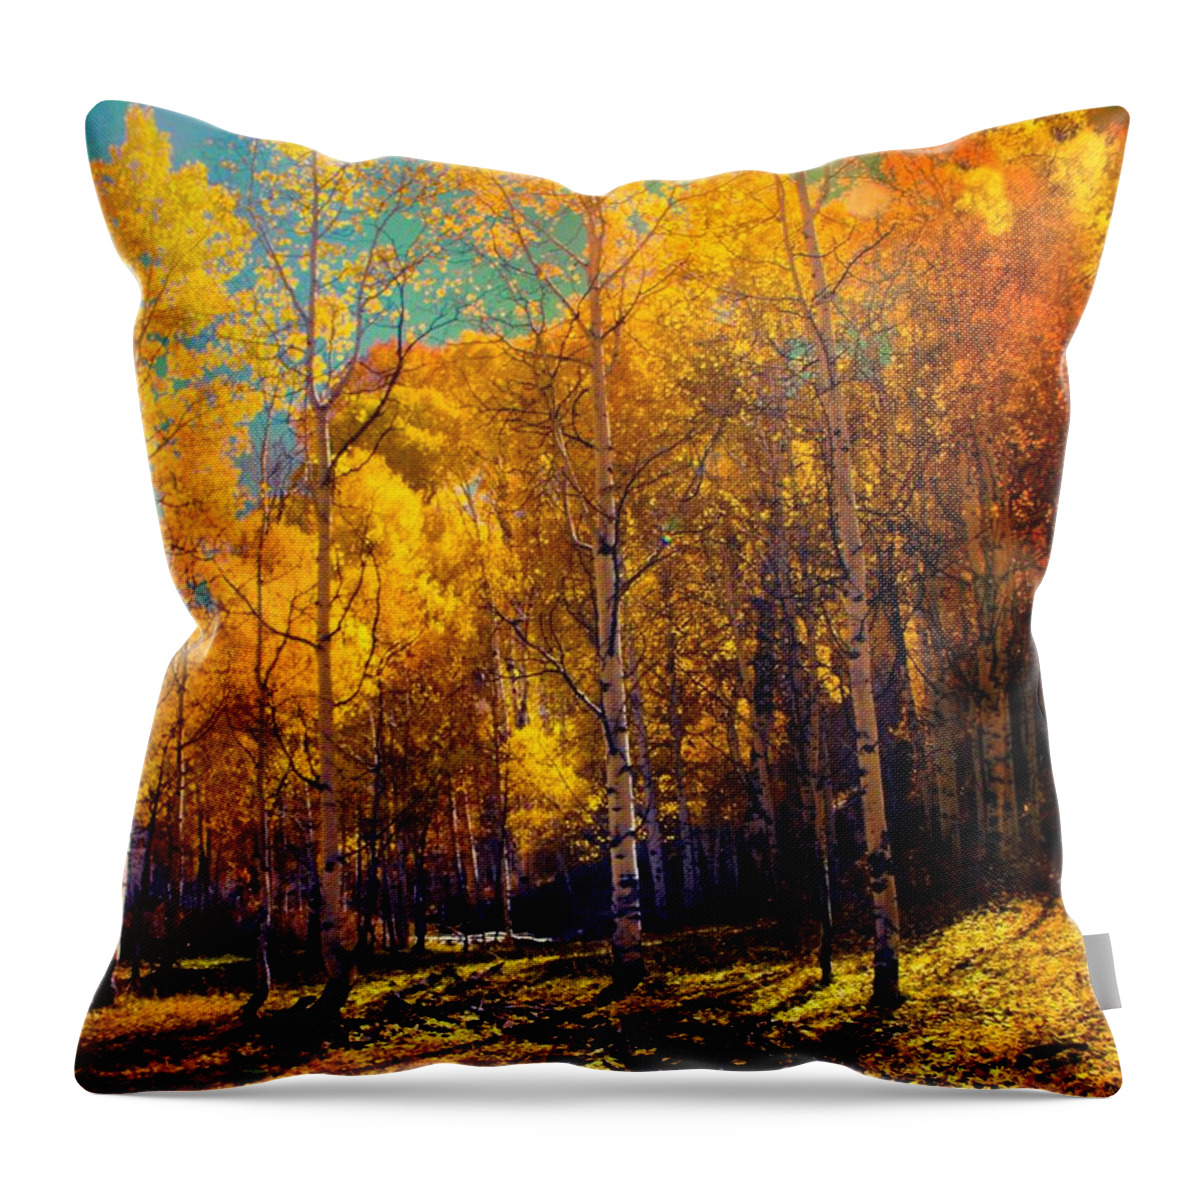 Golden Aspens Uncompahgre Plateau Colorado Throw Pillow featuring the digital art Golden Aspens by Annie Gibbons